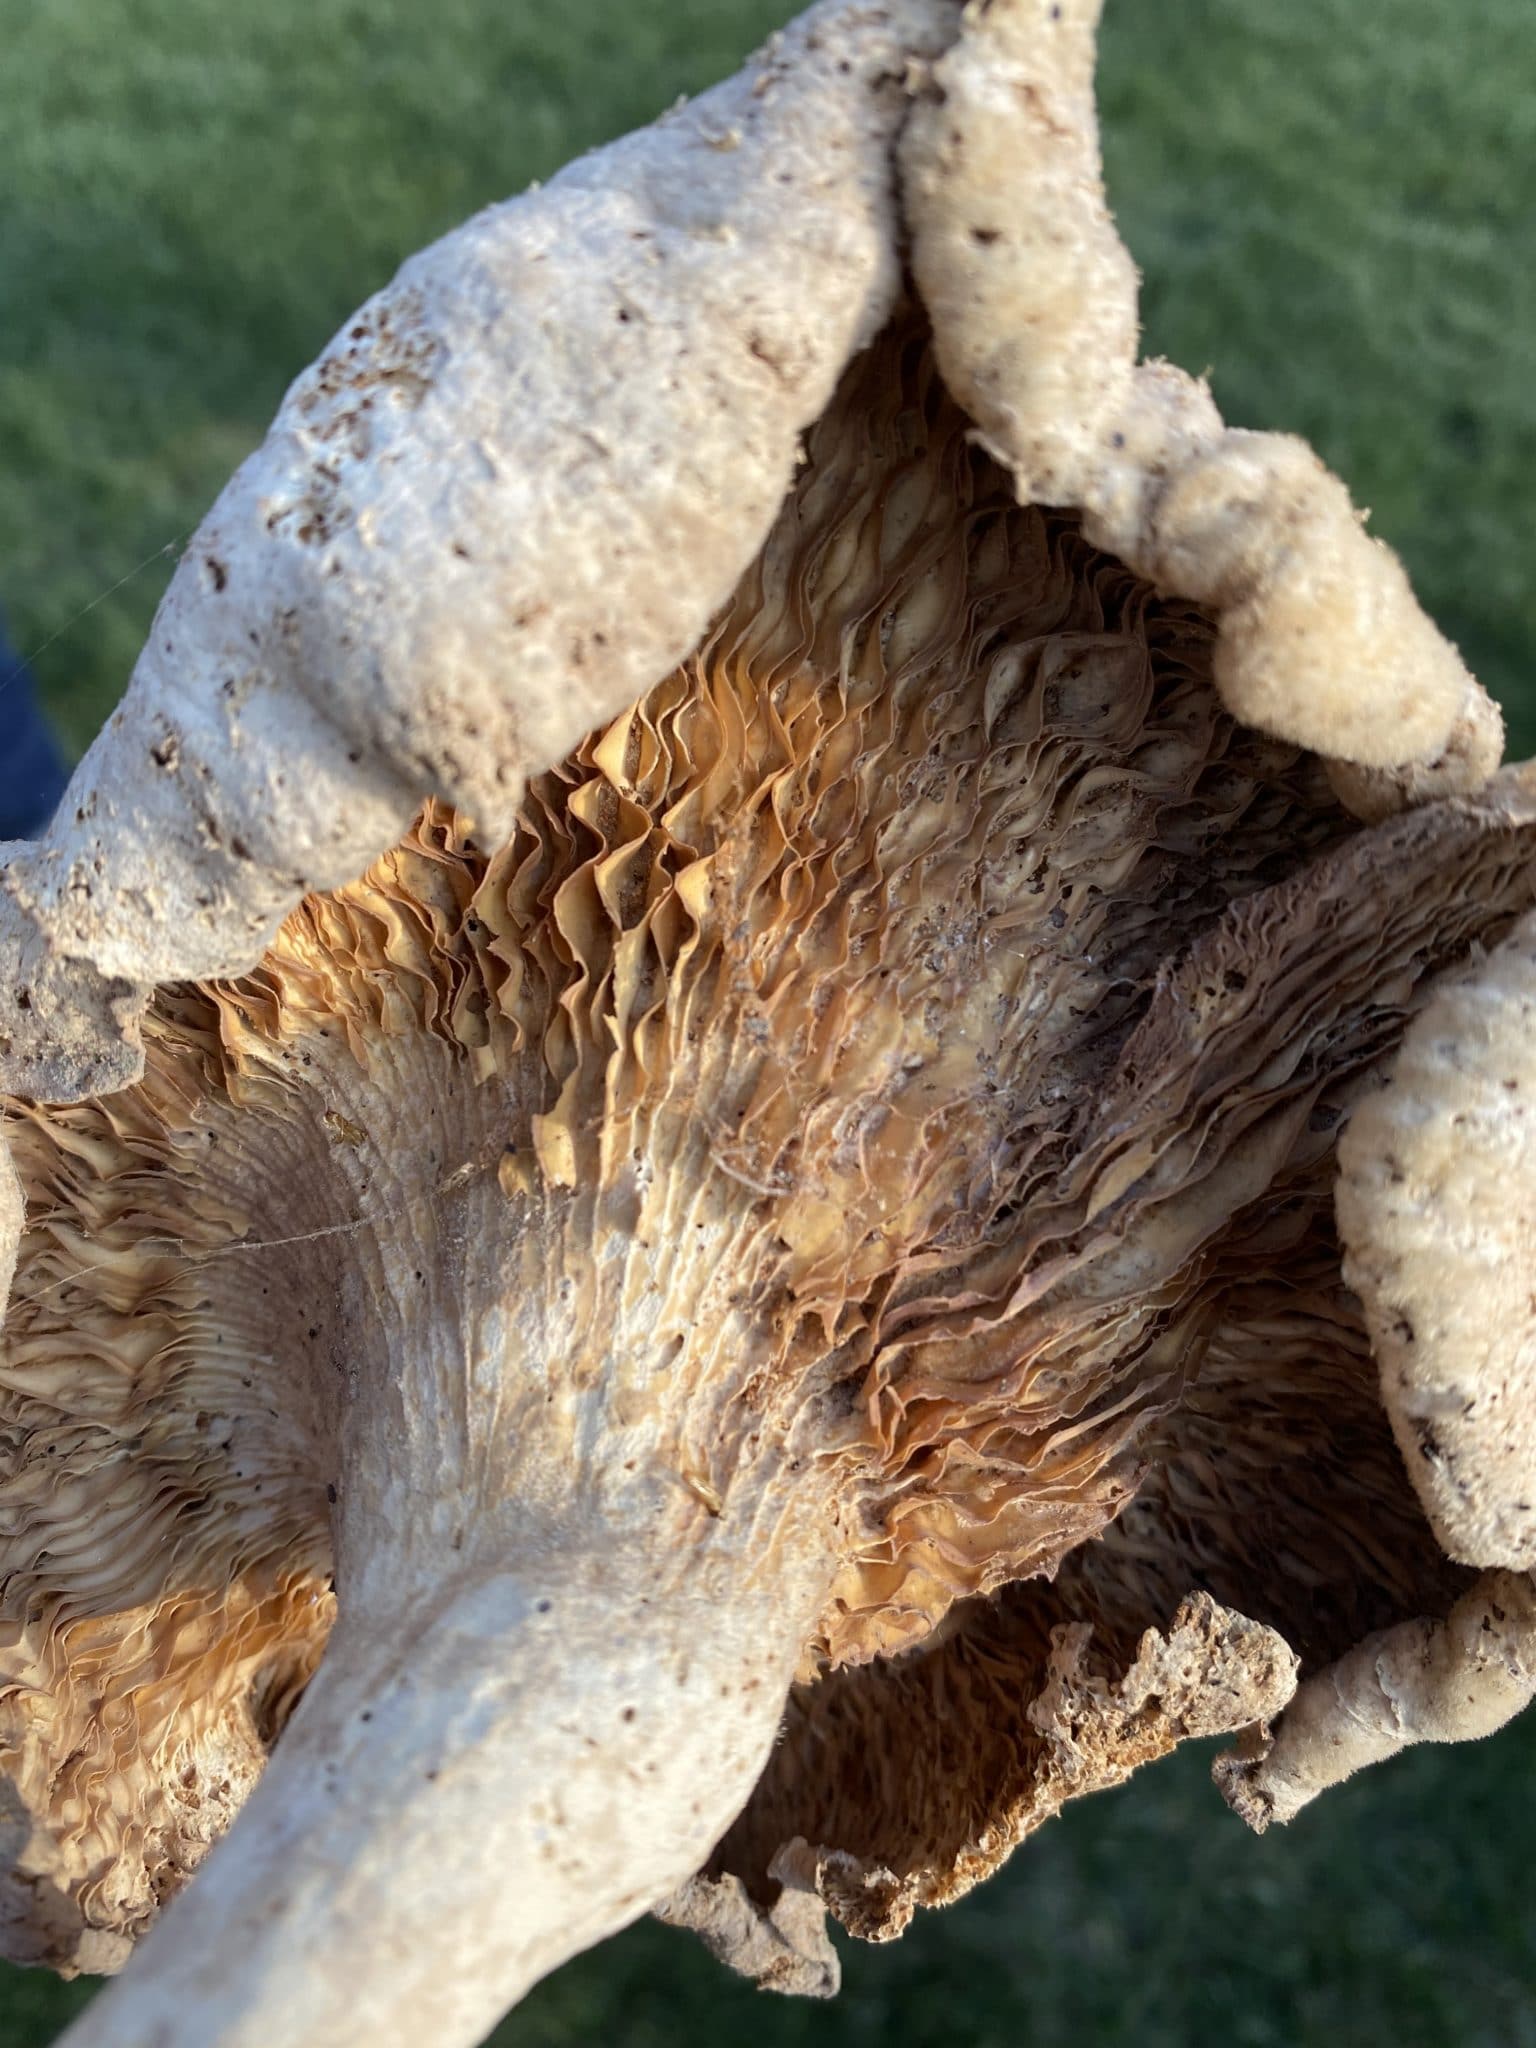 The inside of a mushroom